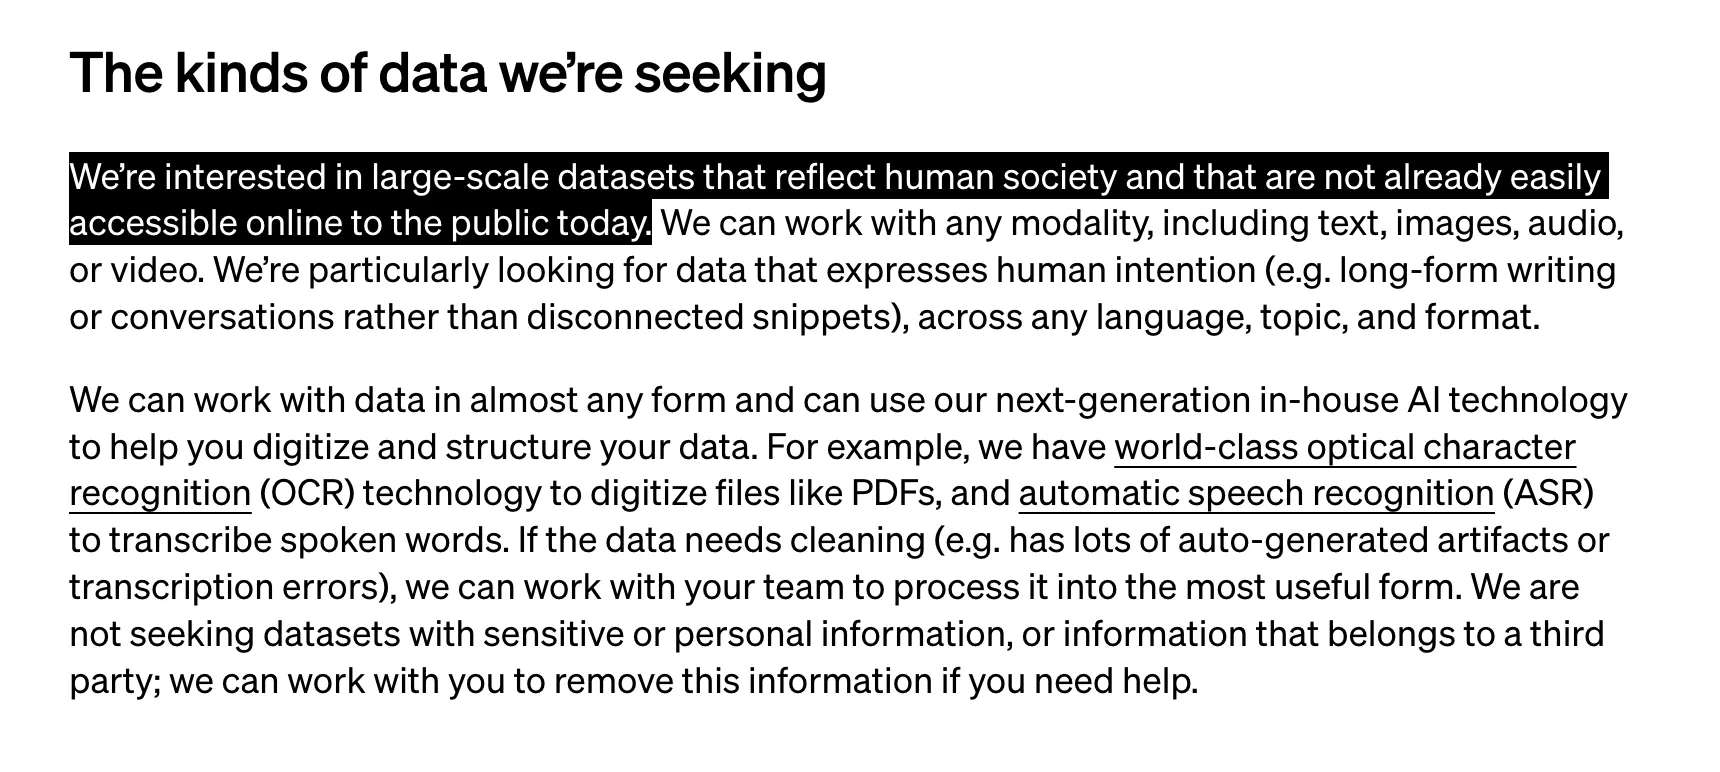 OpenAI 博客中的一张截图，日期为 2023 年 11 月 9 日，标题为“寻求数据合作伙伴”，内容说明他们对“反映人类社会且目前未能轻易在网上公开获取的大型数据集”感兴趣